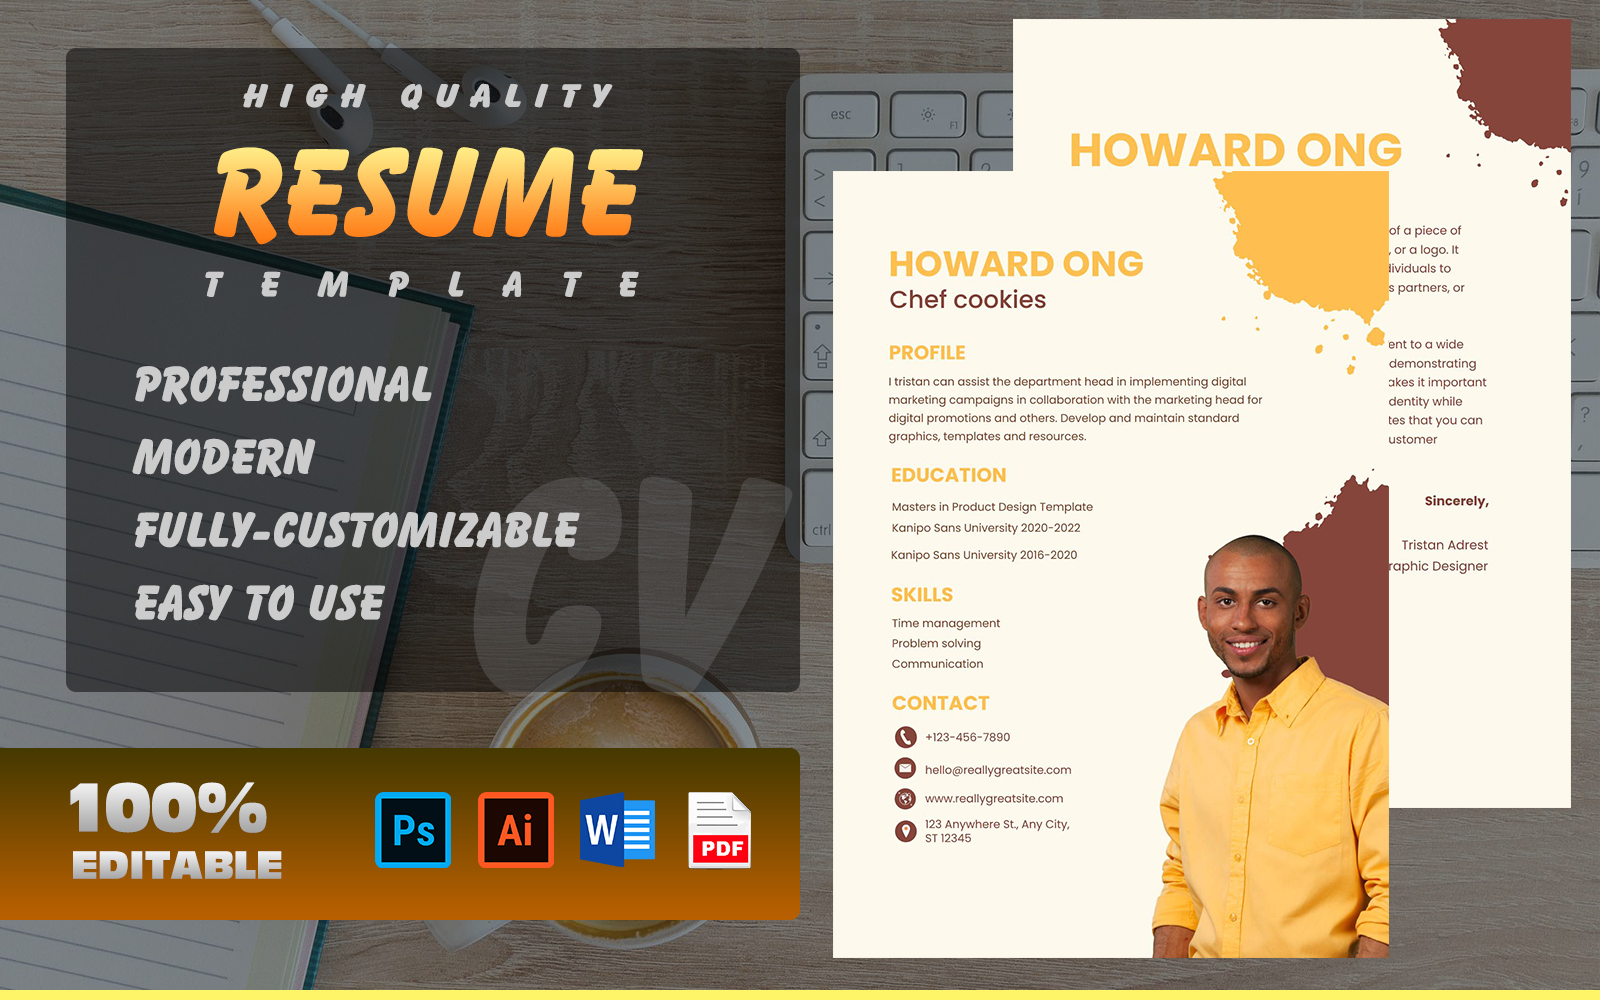 Resume / CV | Professional | Modern | High quality | 100% Editable 2